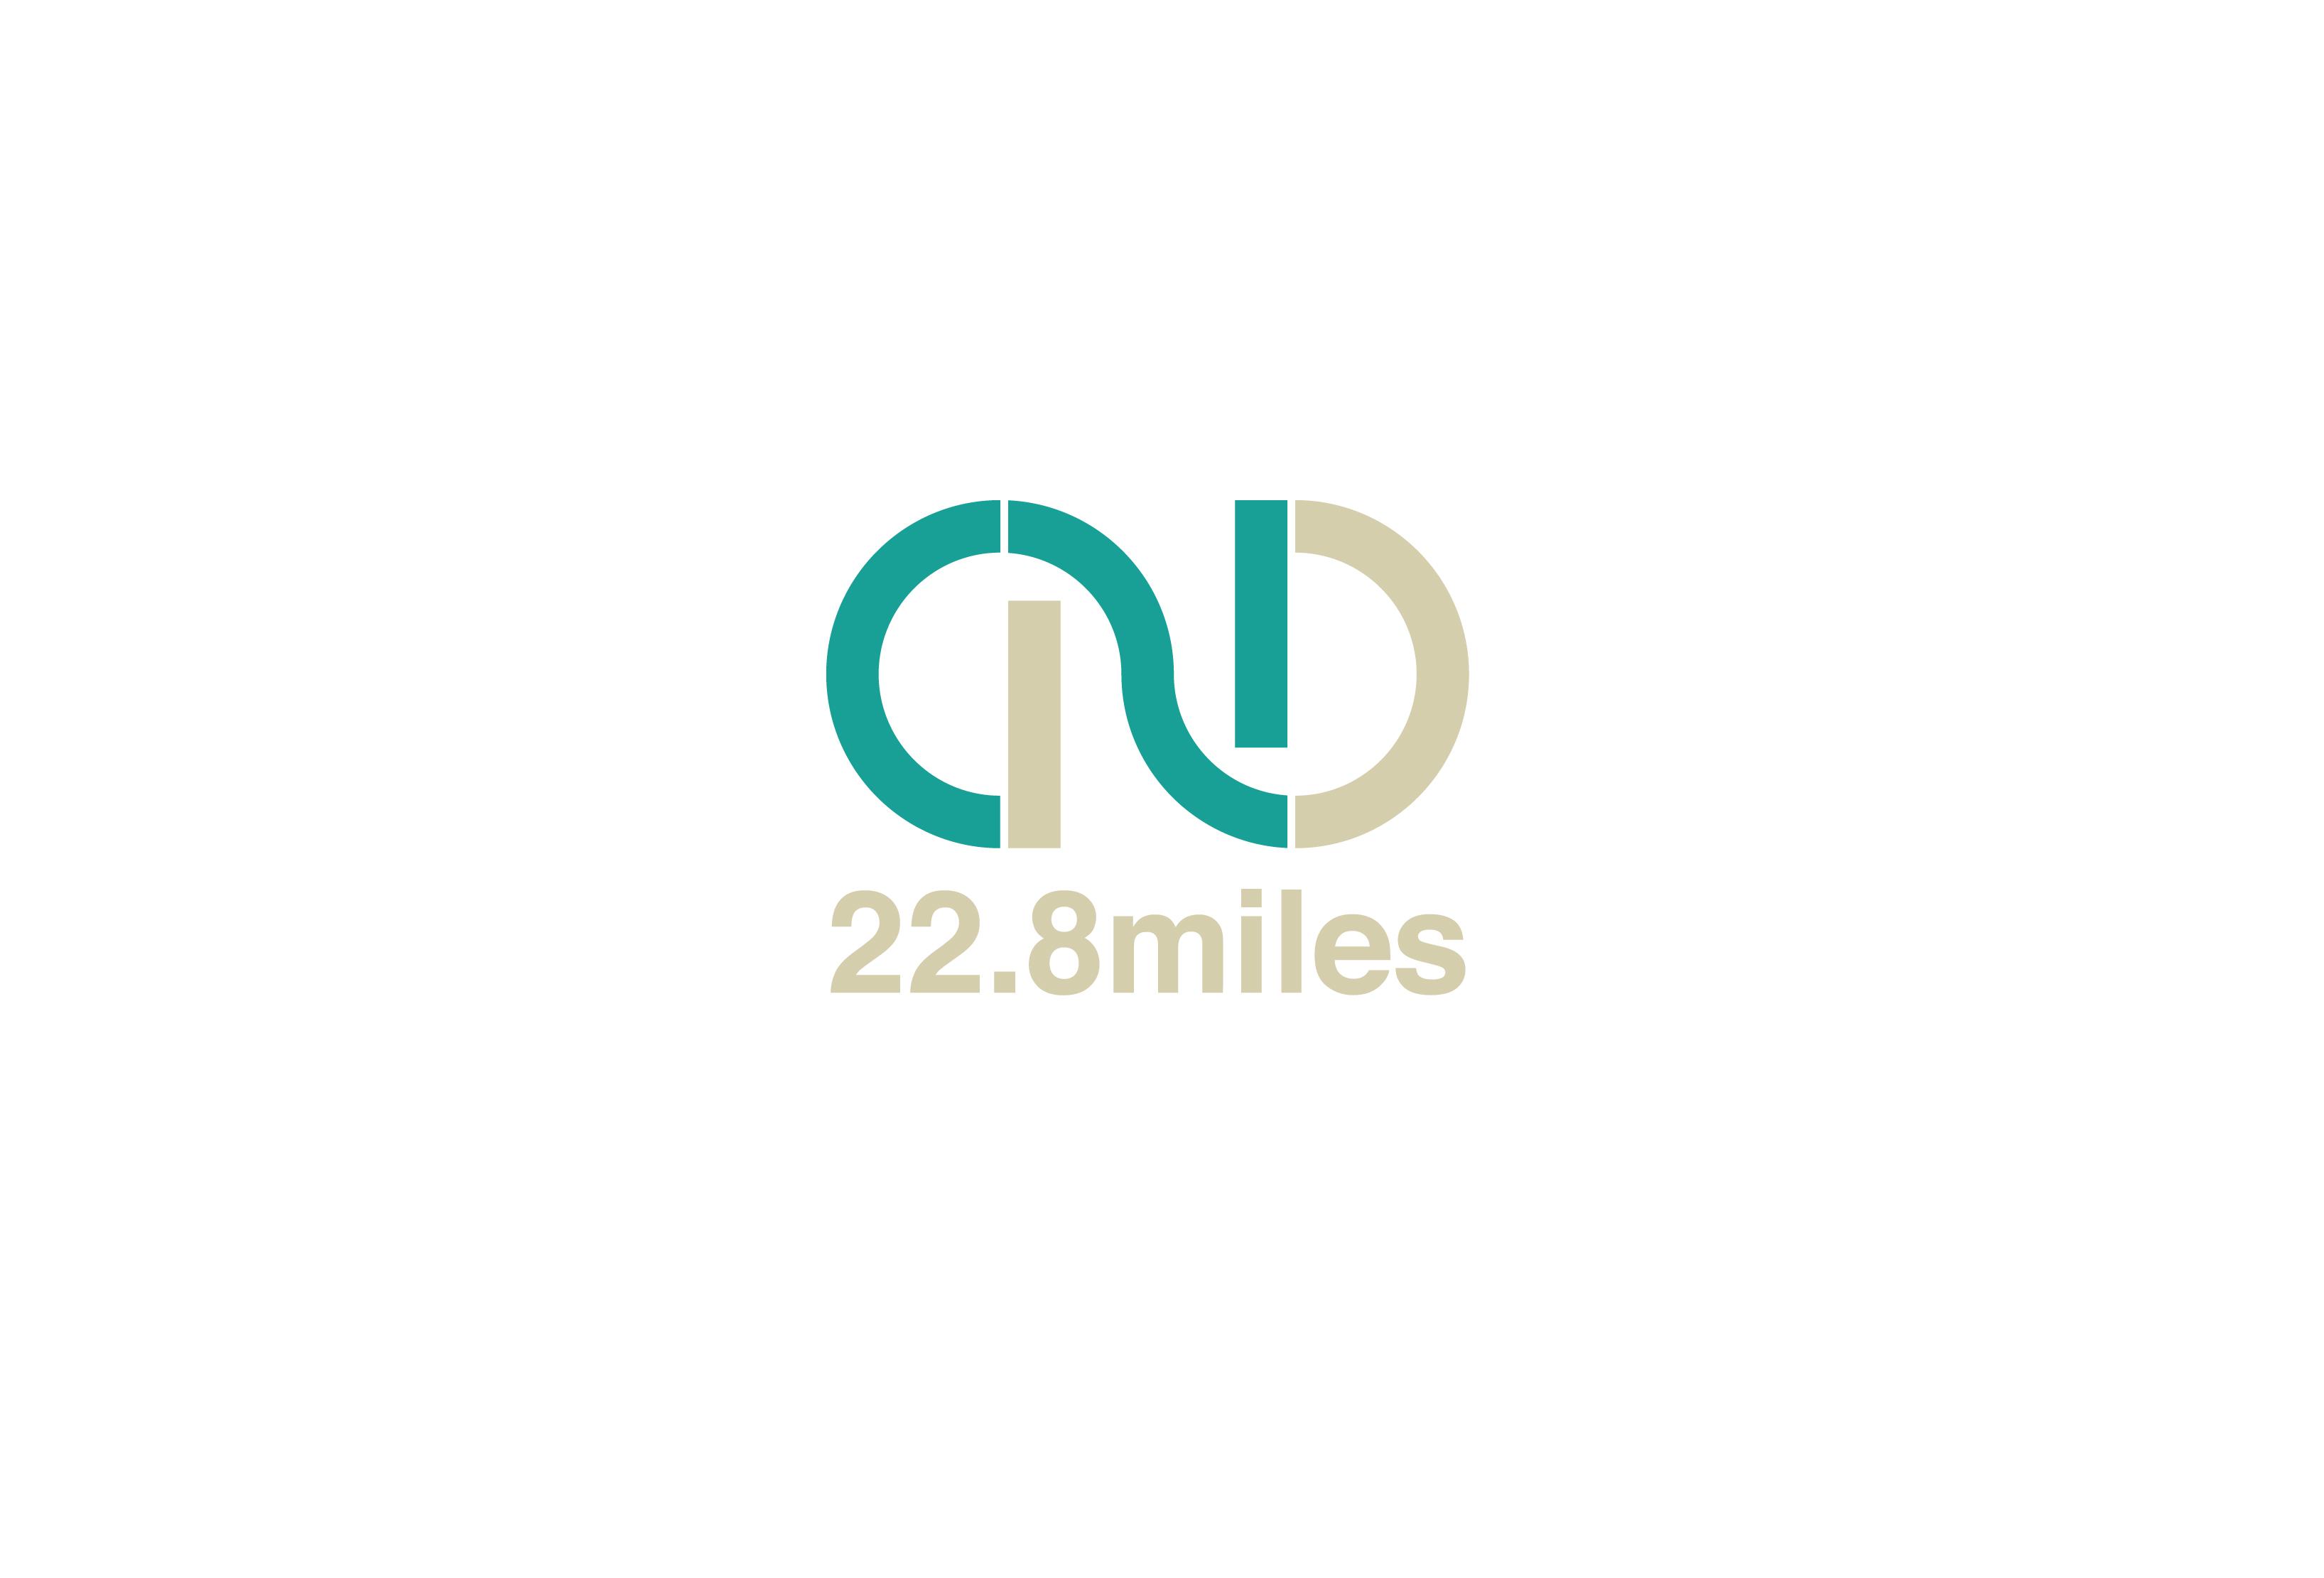 22 Logo - 22.8miles = Hang Do Thi Duc